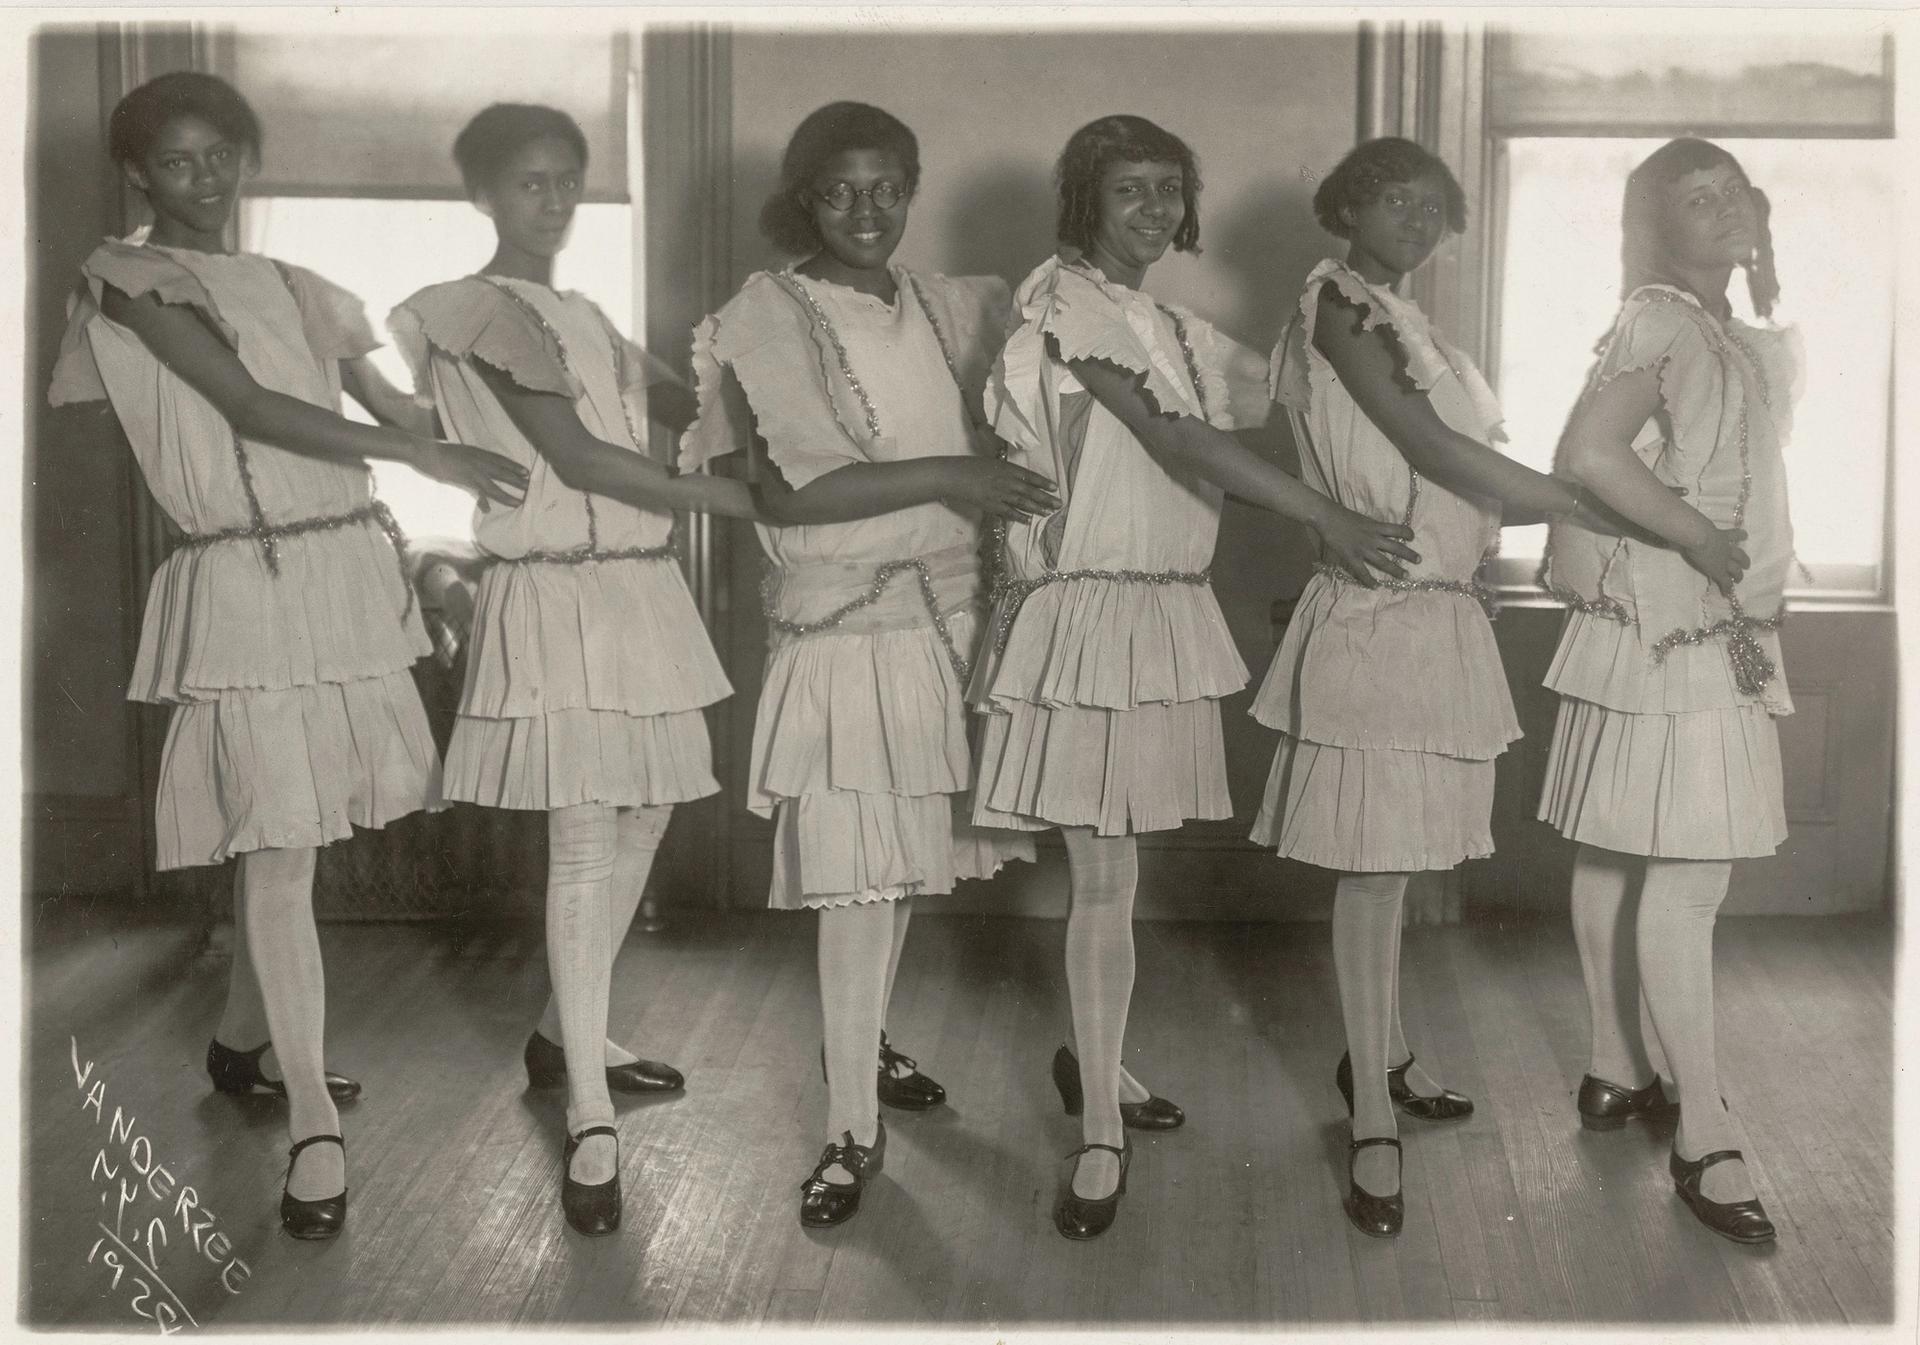 James Van Der Zee. Tap Dance Dress Rehearsal (1928), vintage gelatin silver print The Tsiaras Family Photography Collection